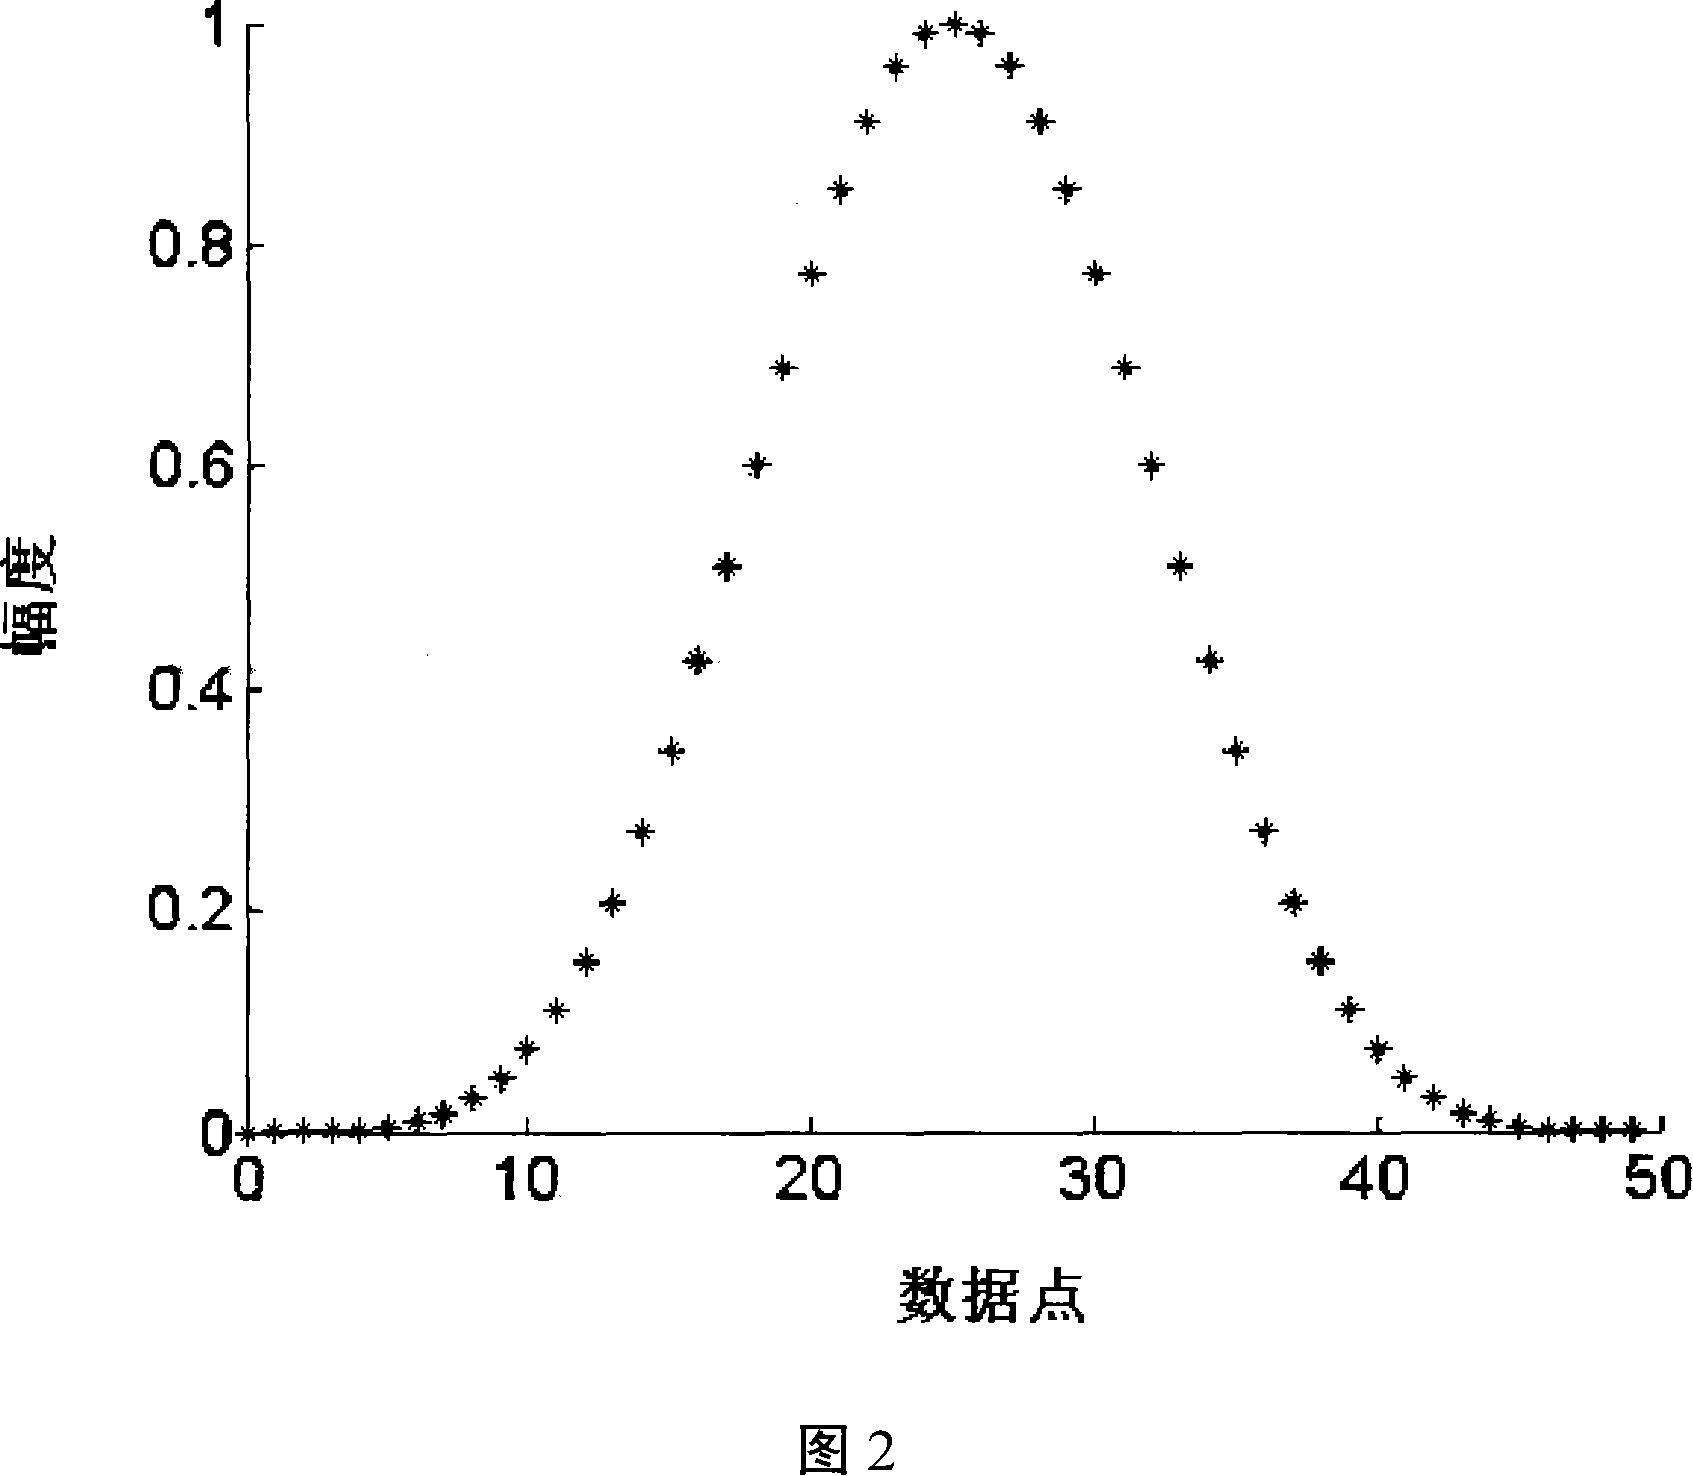 Base wave and harmonic detecting method based on Nuttall window double peak interpolation FFT